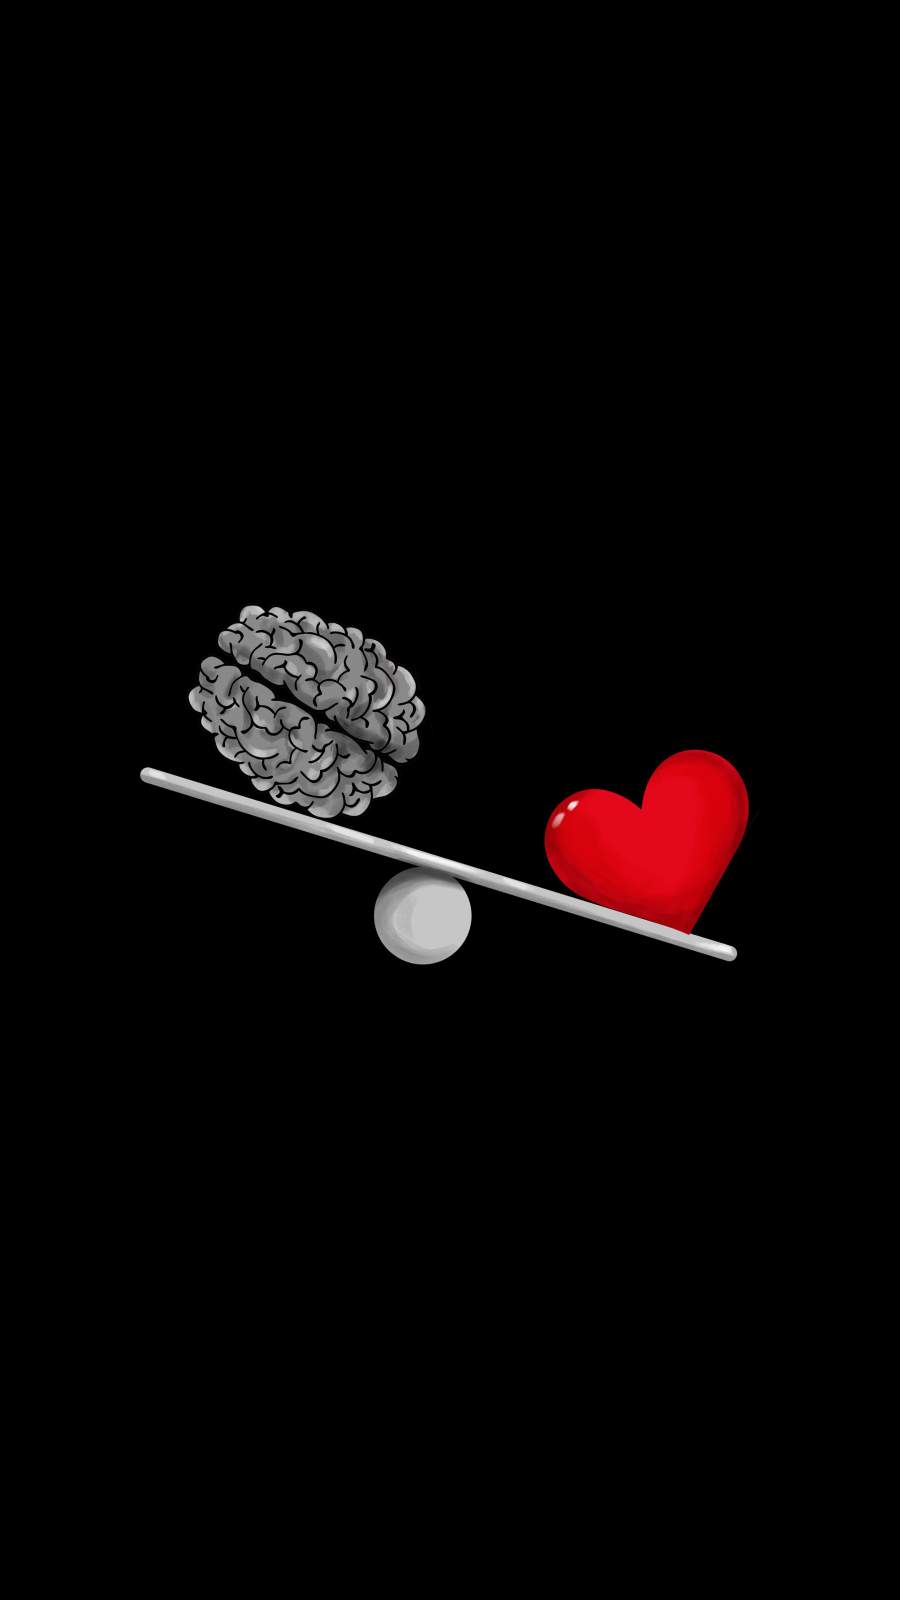 Heart vs Brain iPhone Wallpaper